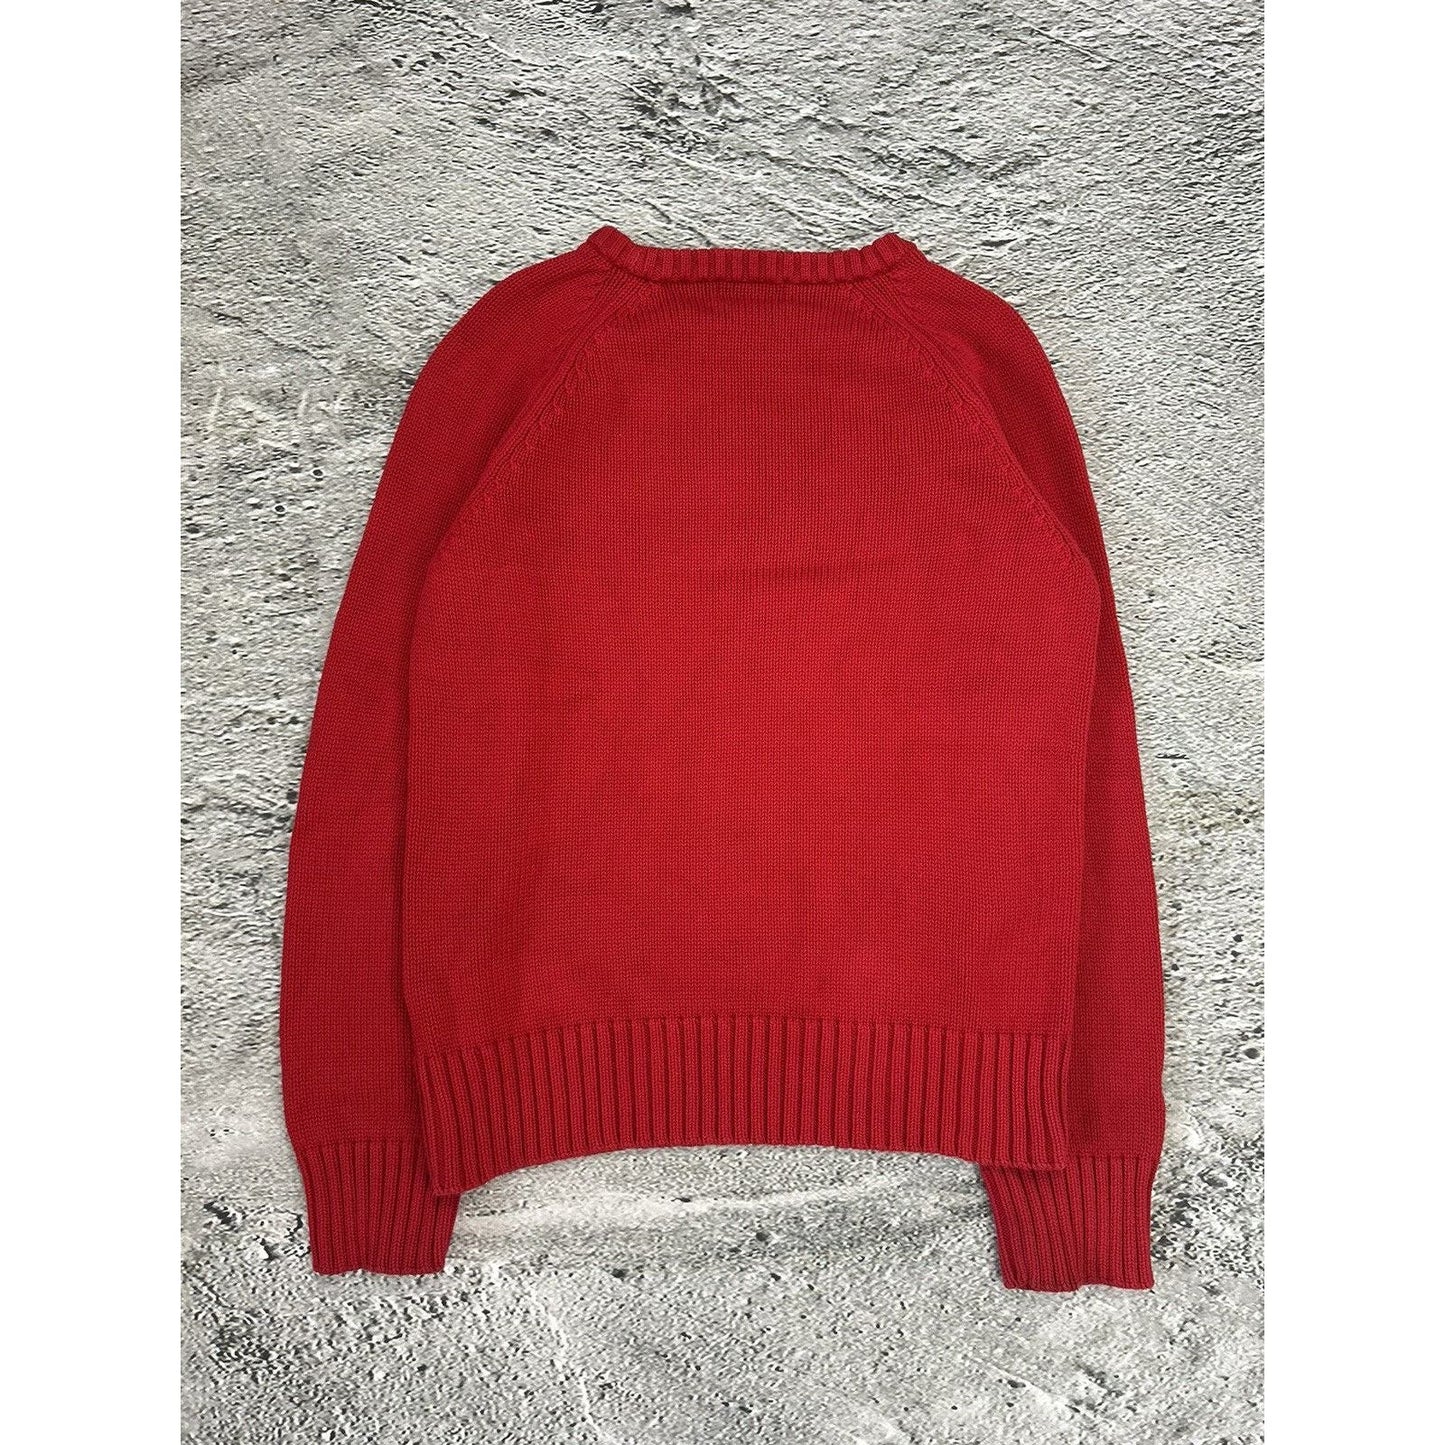 Polo Ralph Lauren flag big logo USA sweater vintage knit red